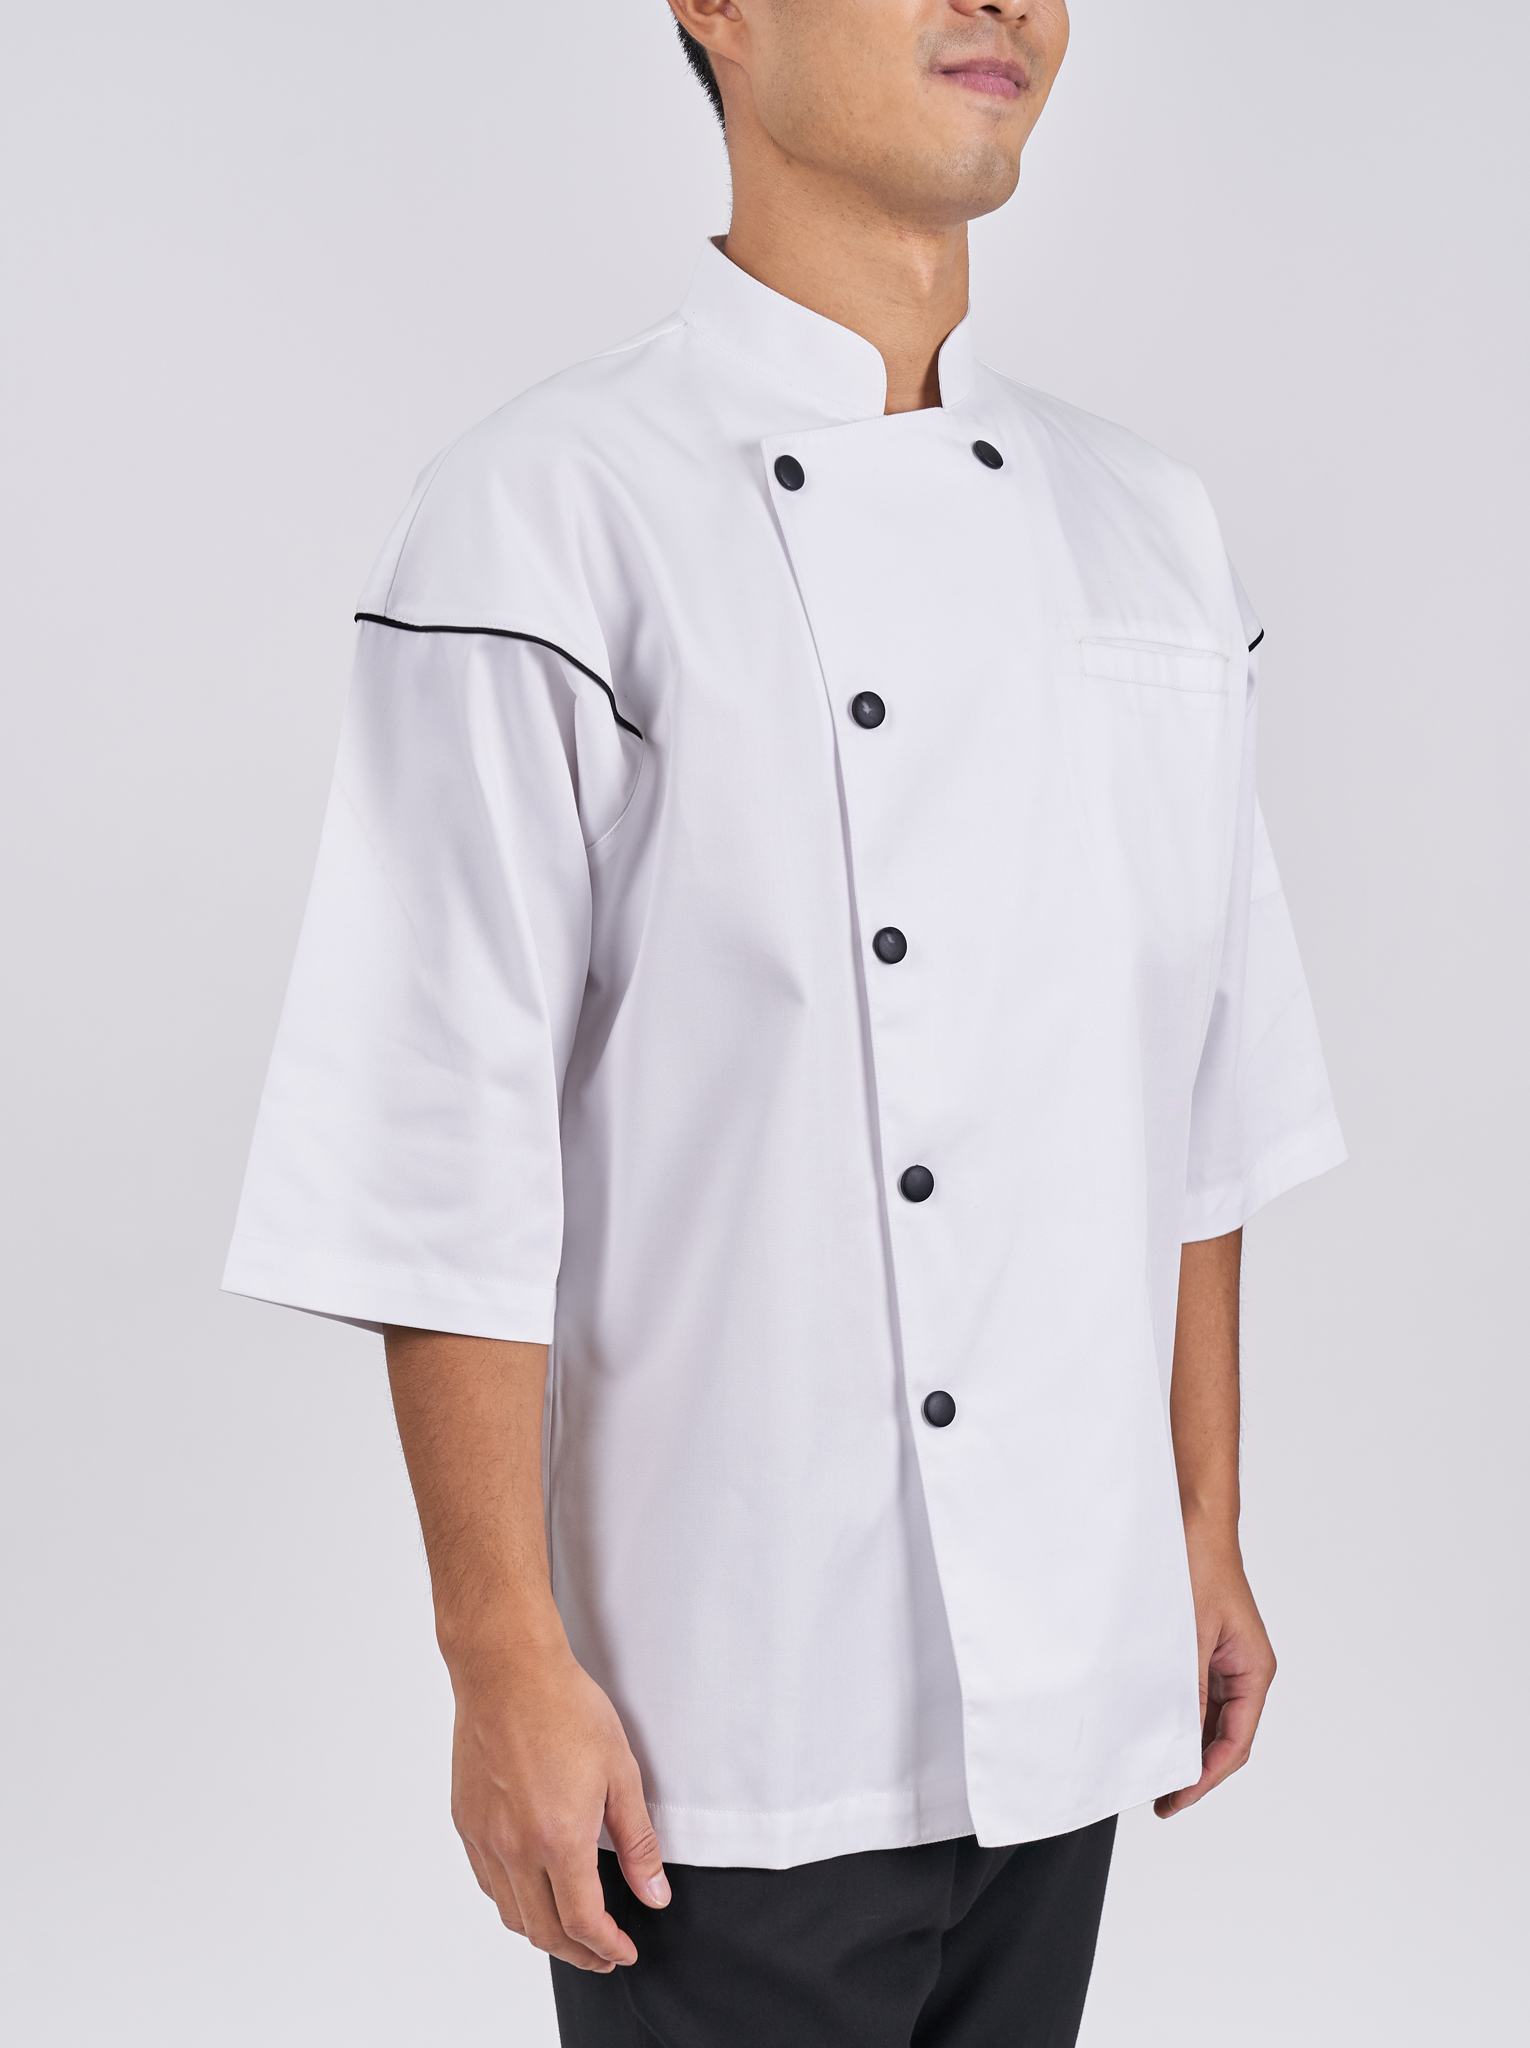 Basic Fit Short Sleeve Chef เสื้อเชฟเบสิคแขนสั้น (White, สีขาว)